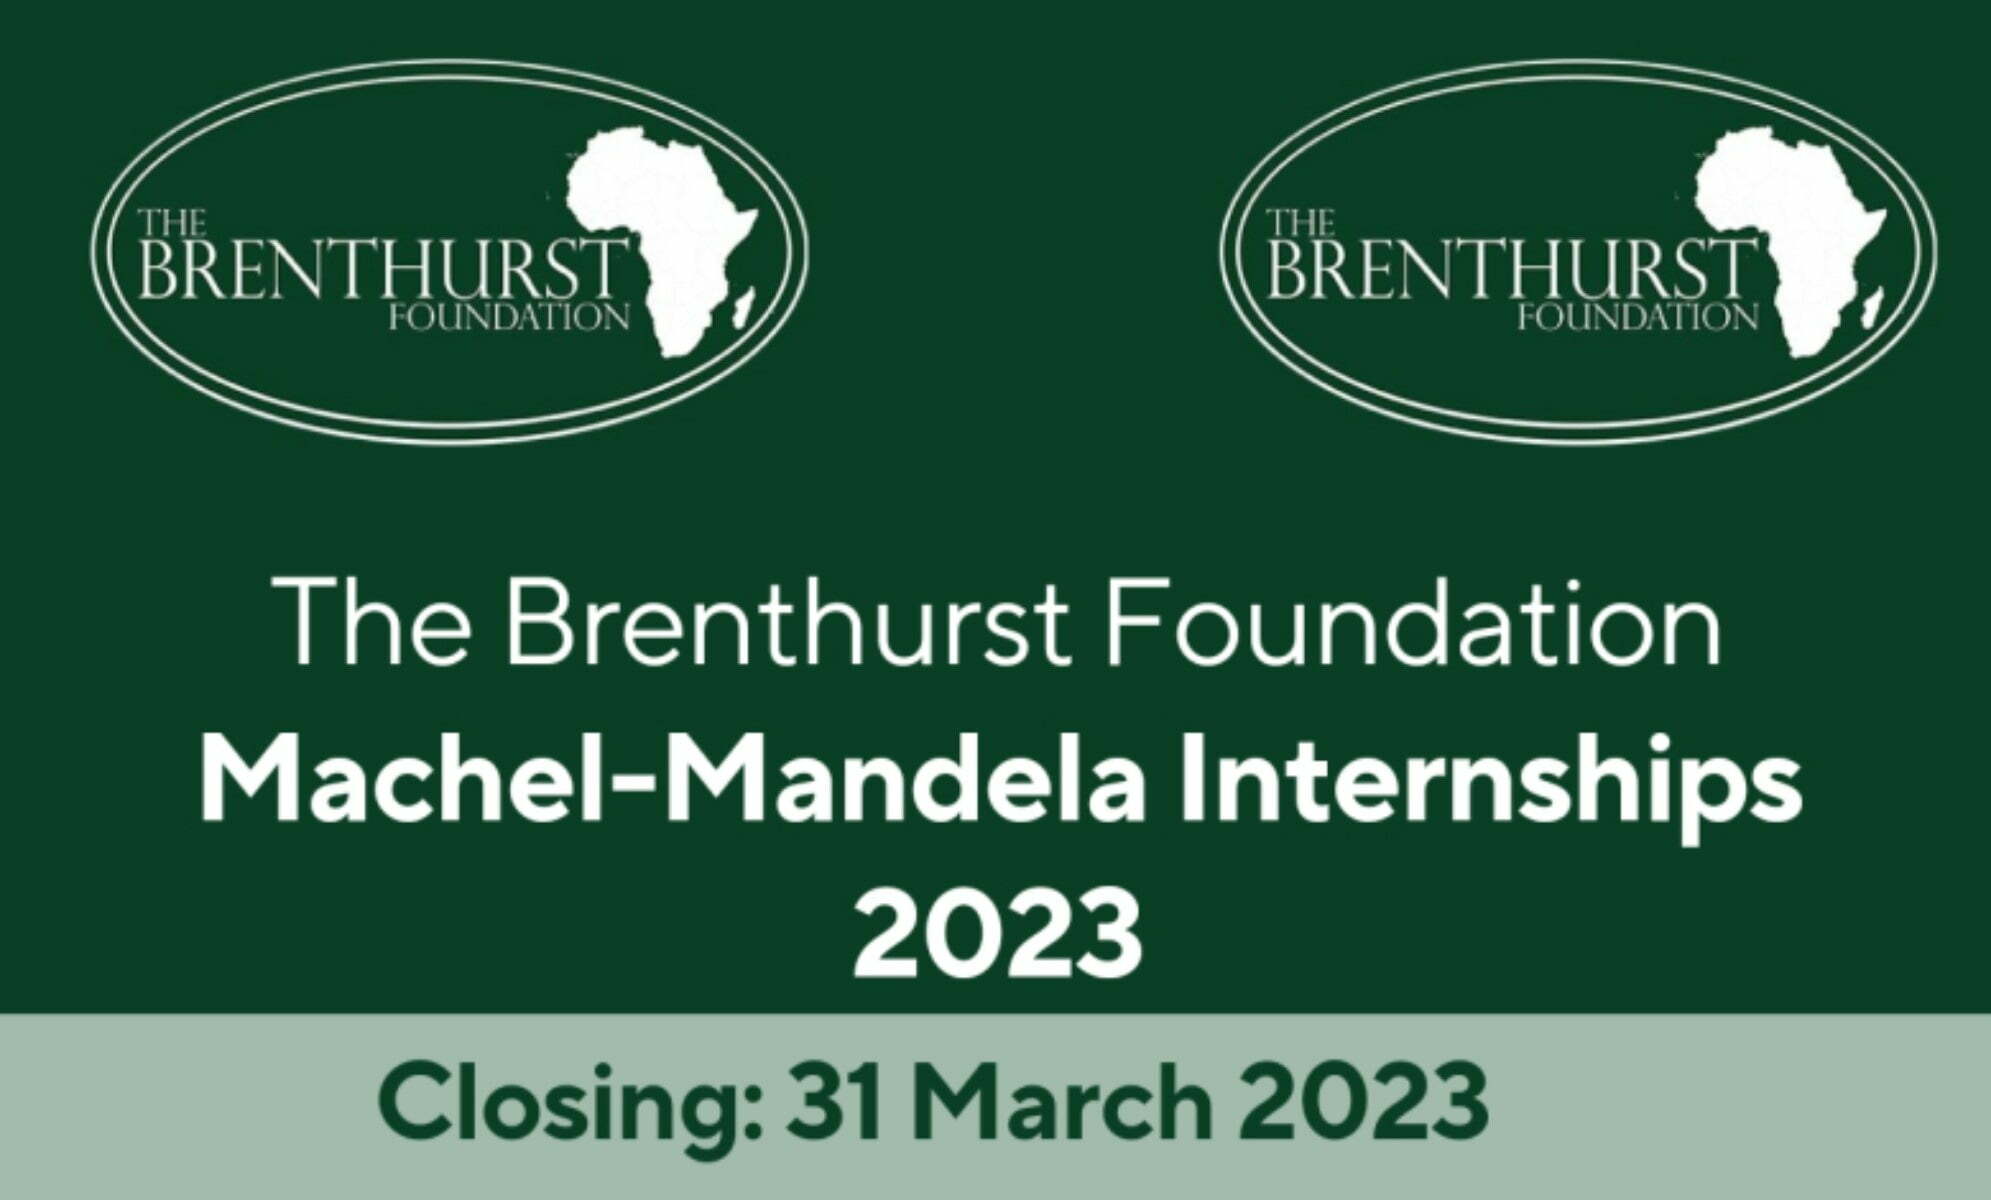 Machel-Mandela Internship Programme 2023 at Brenthurst Foundation